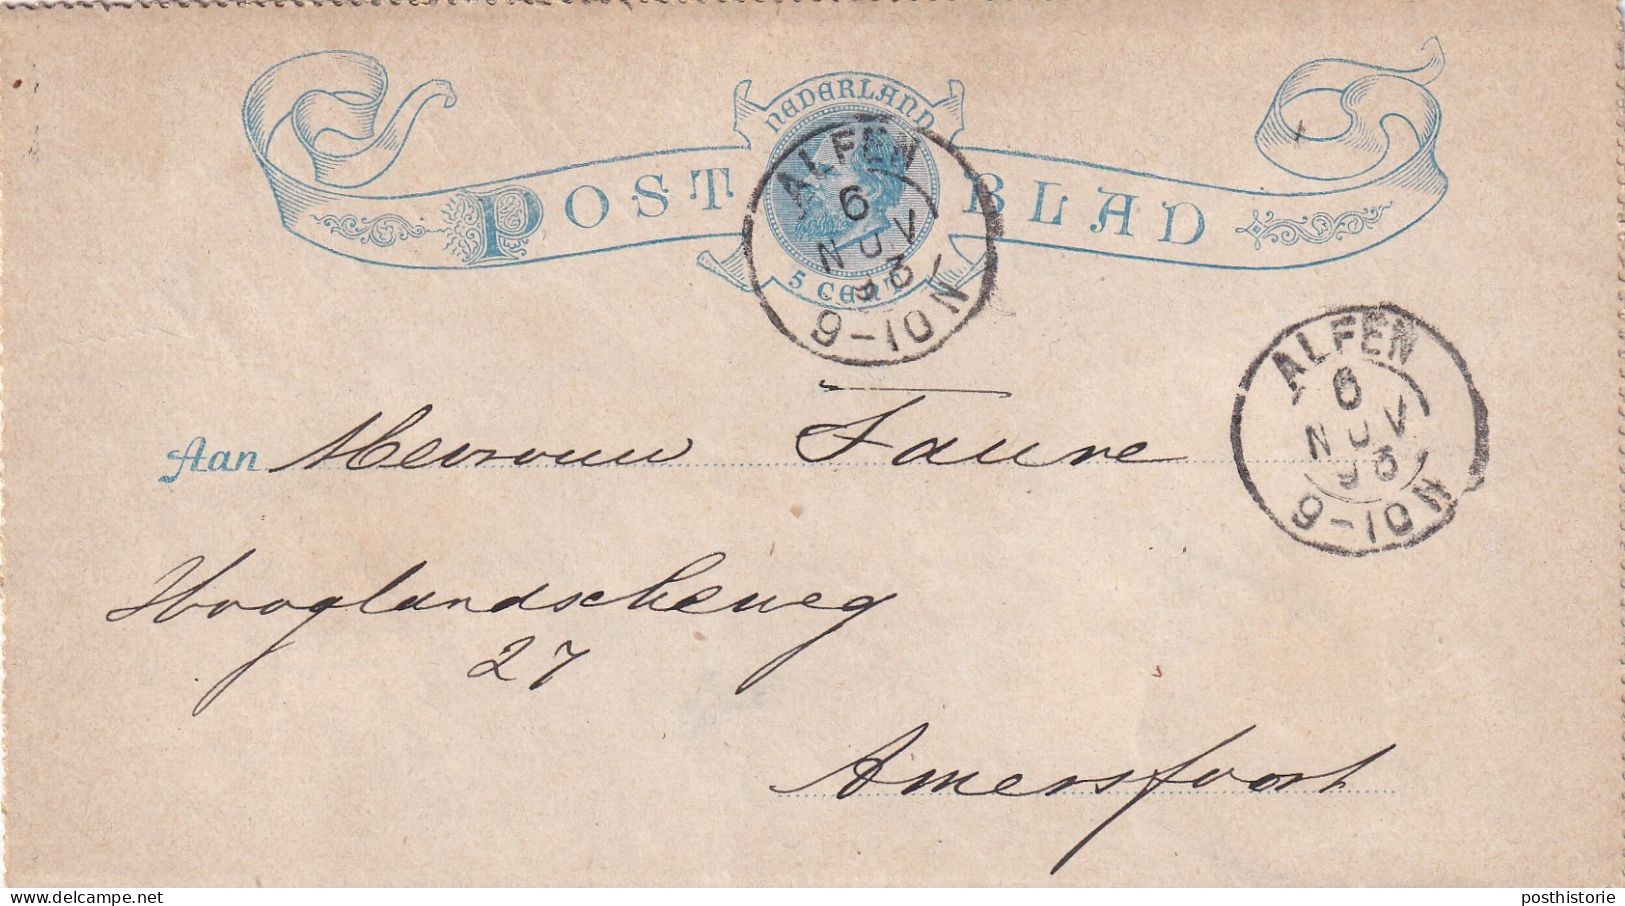 Postblad 6 Nov 1893 Alfen (postkantoor Kleinrond) Naar Amersfoort (kleinrond) - Poststempel